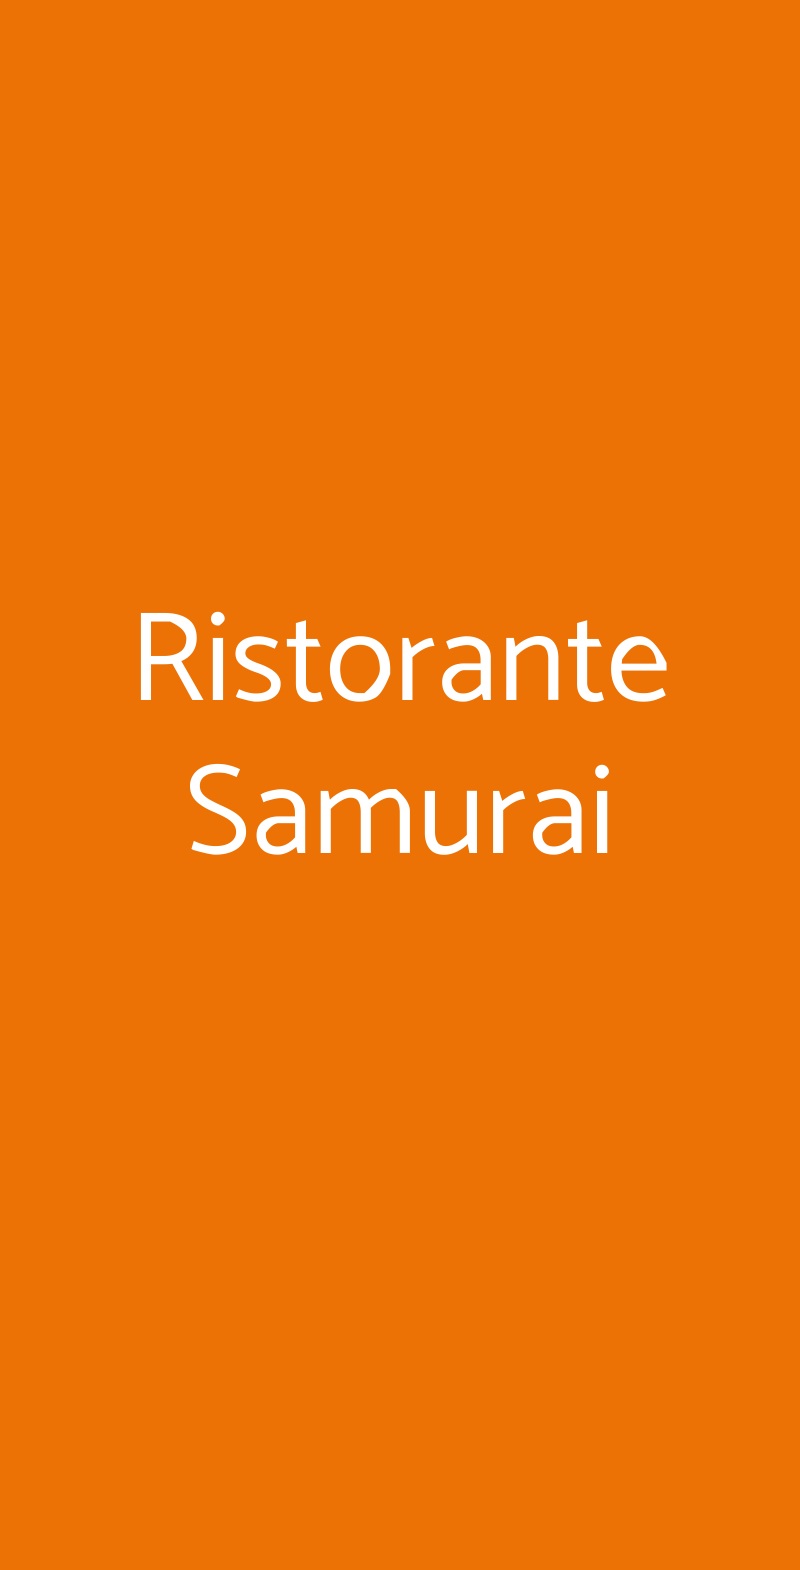 Ristorante Samurai Roma menù 1 pagina